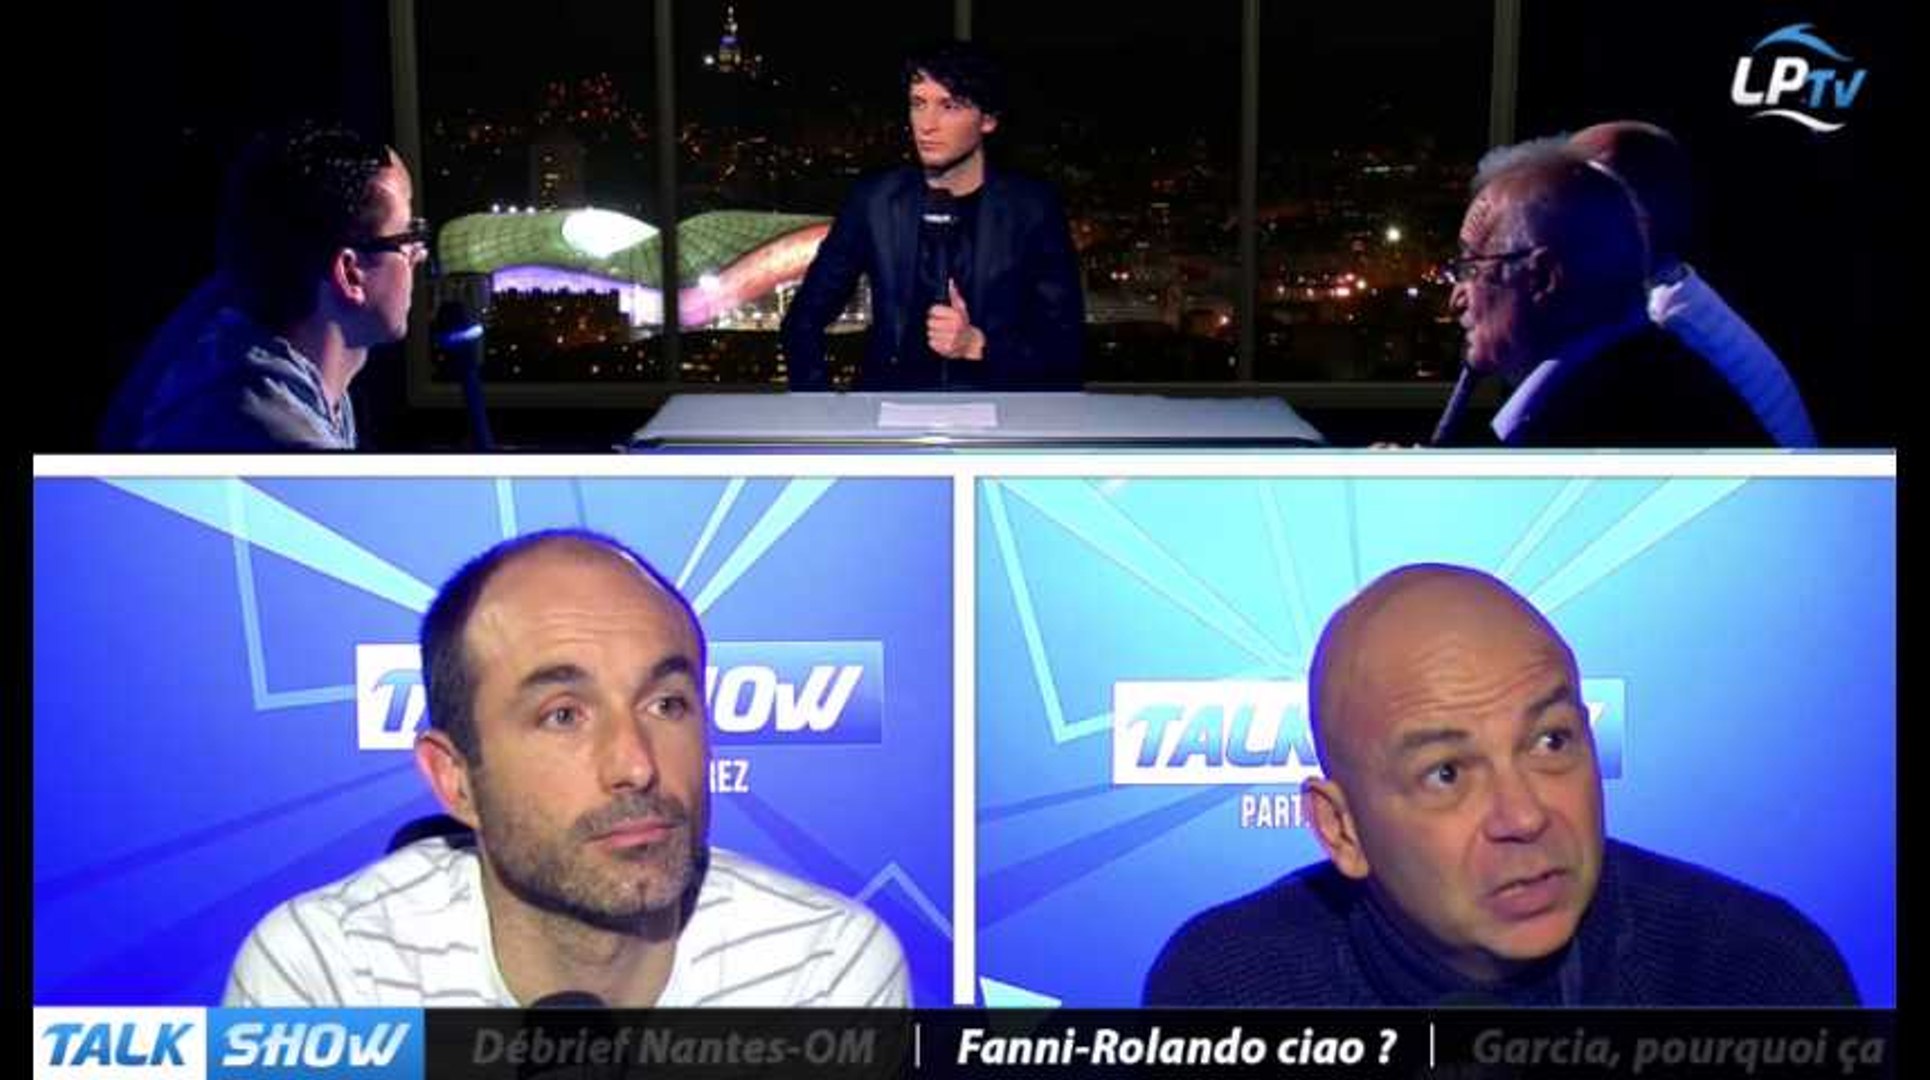 Talk Show du 13/02, partie 2 : Fanni-Rolando, ciao ? - Vidéo Dailymotion